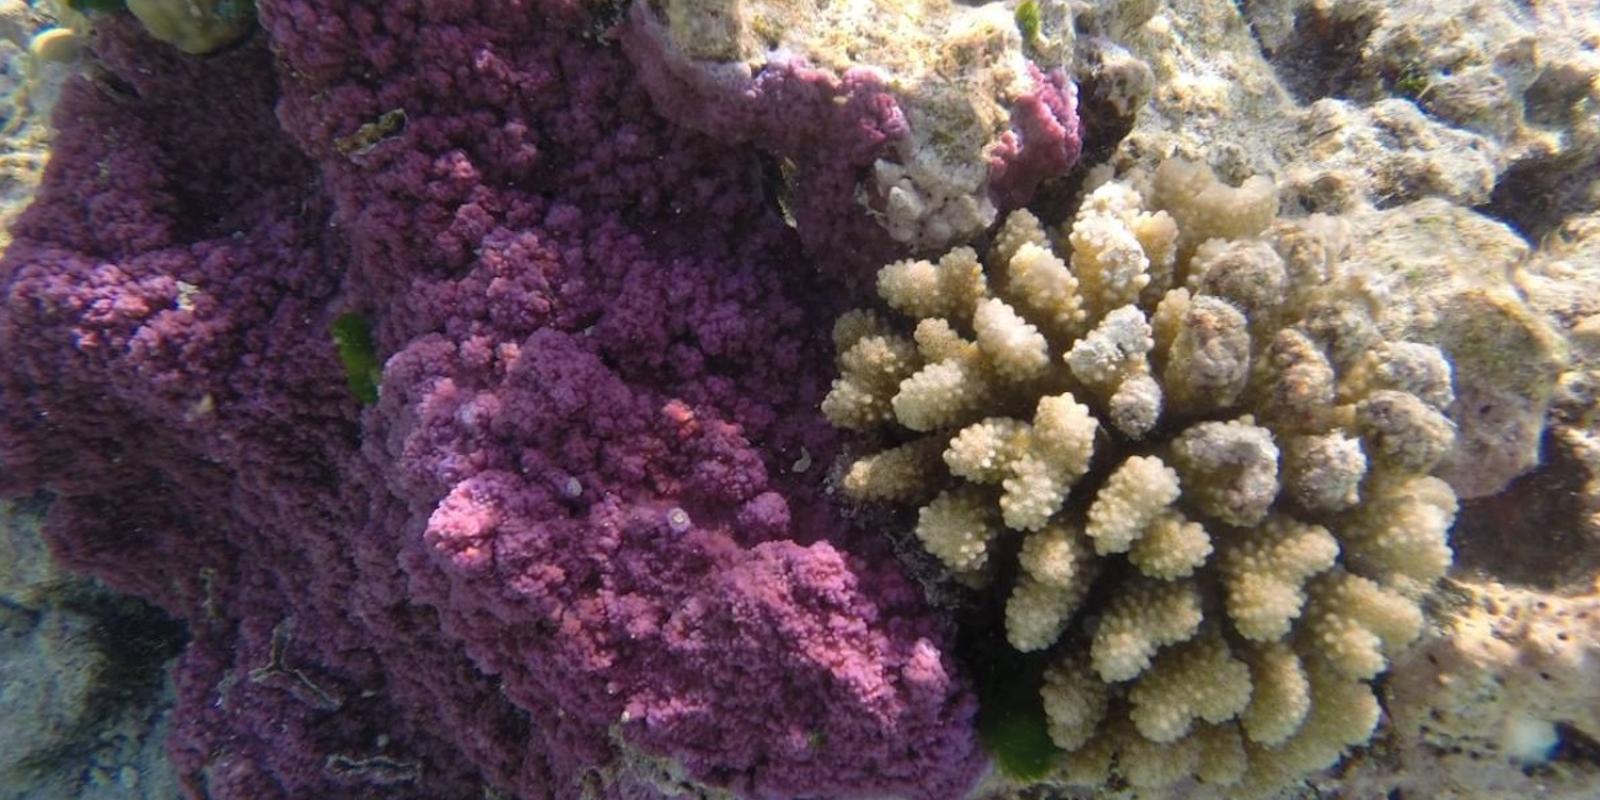 UW scientists are studying coral around Tetiaroa atoll